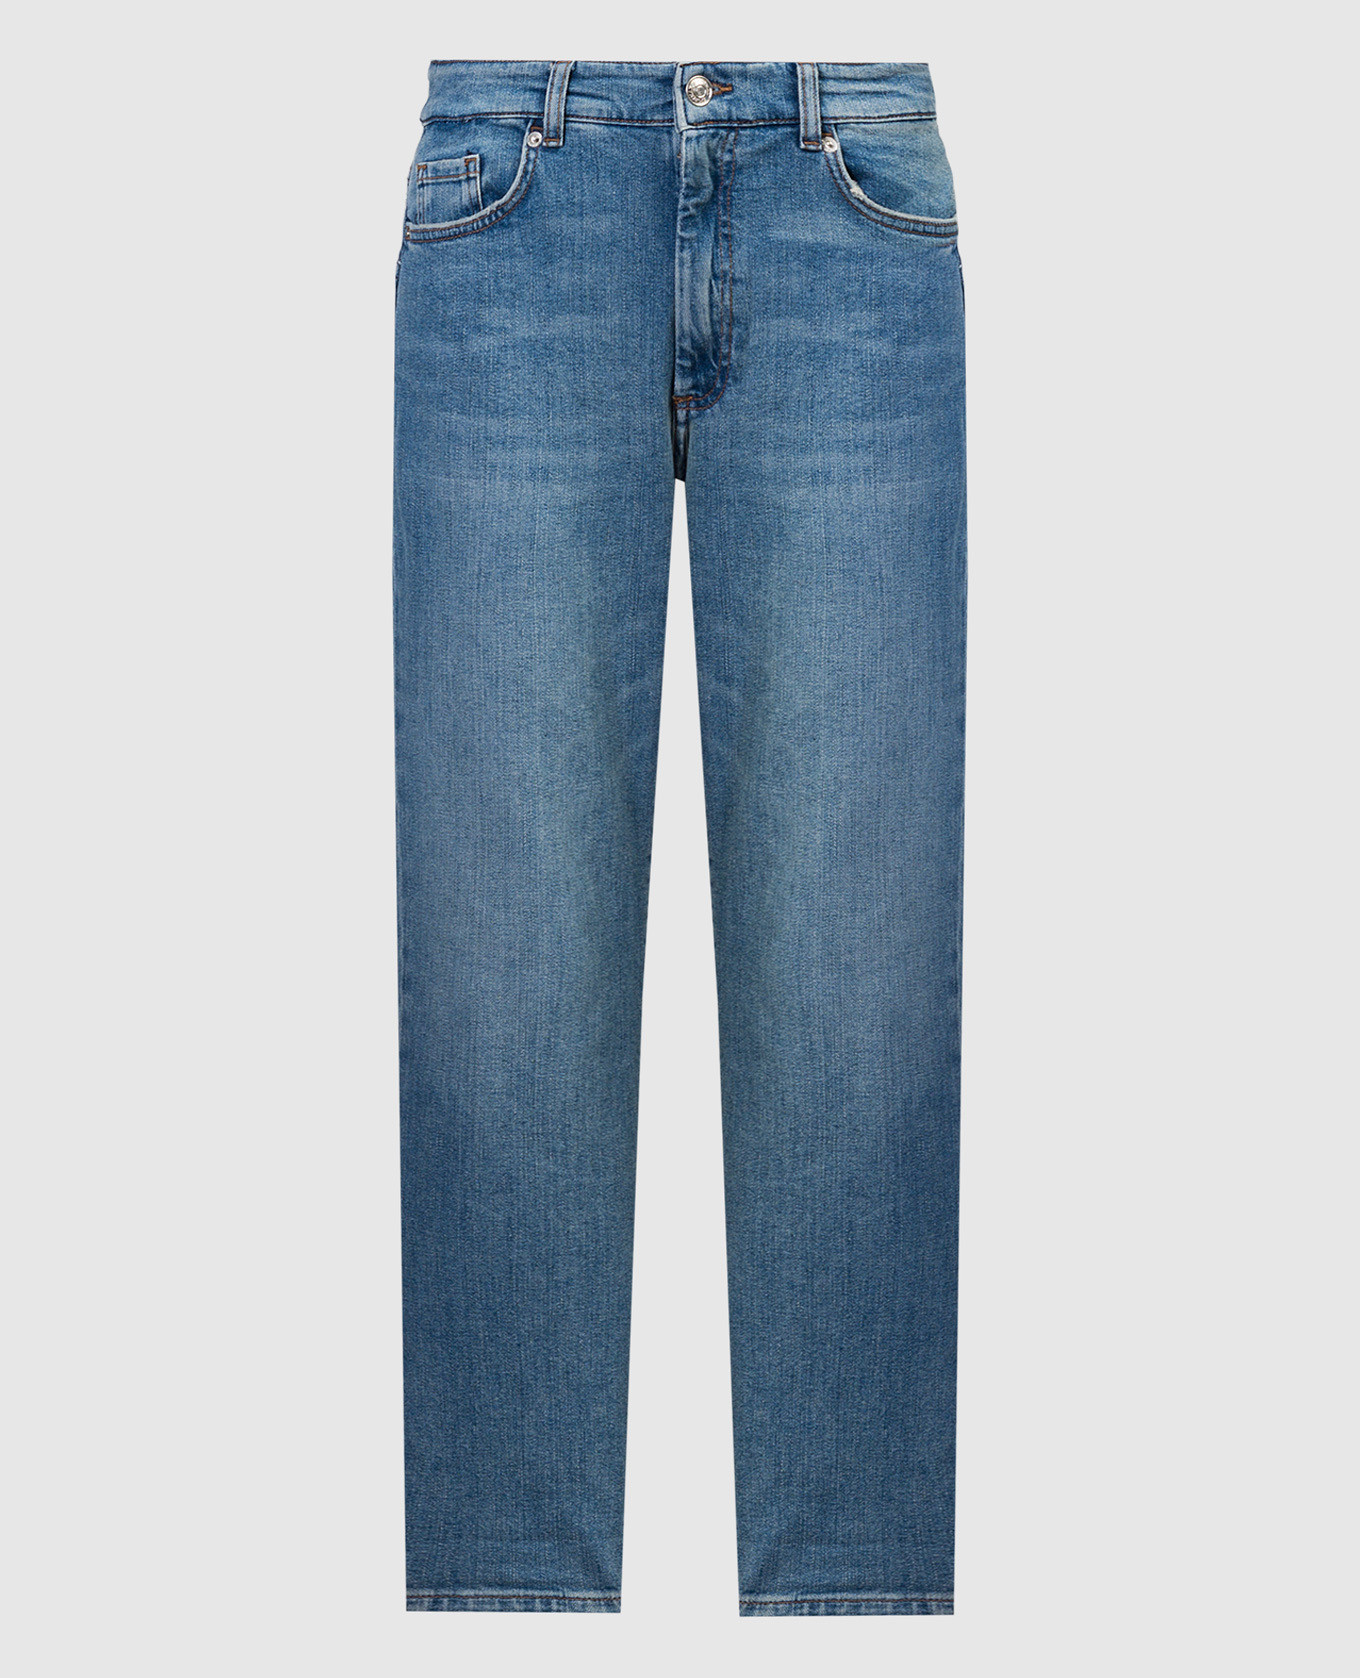 Navata blue distressed jeans